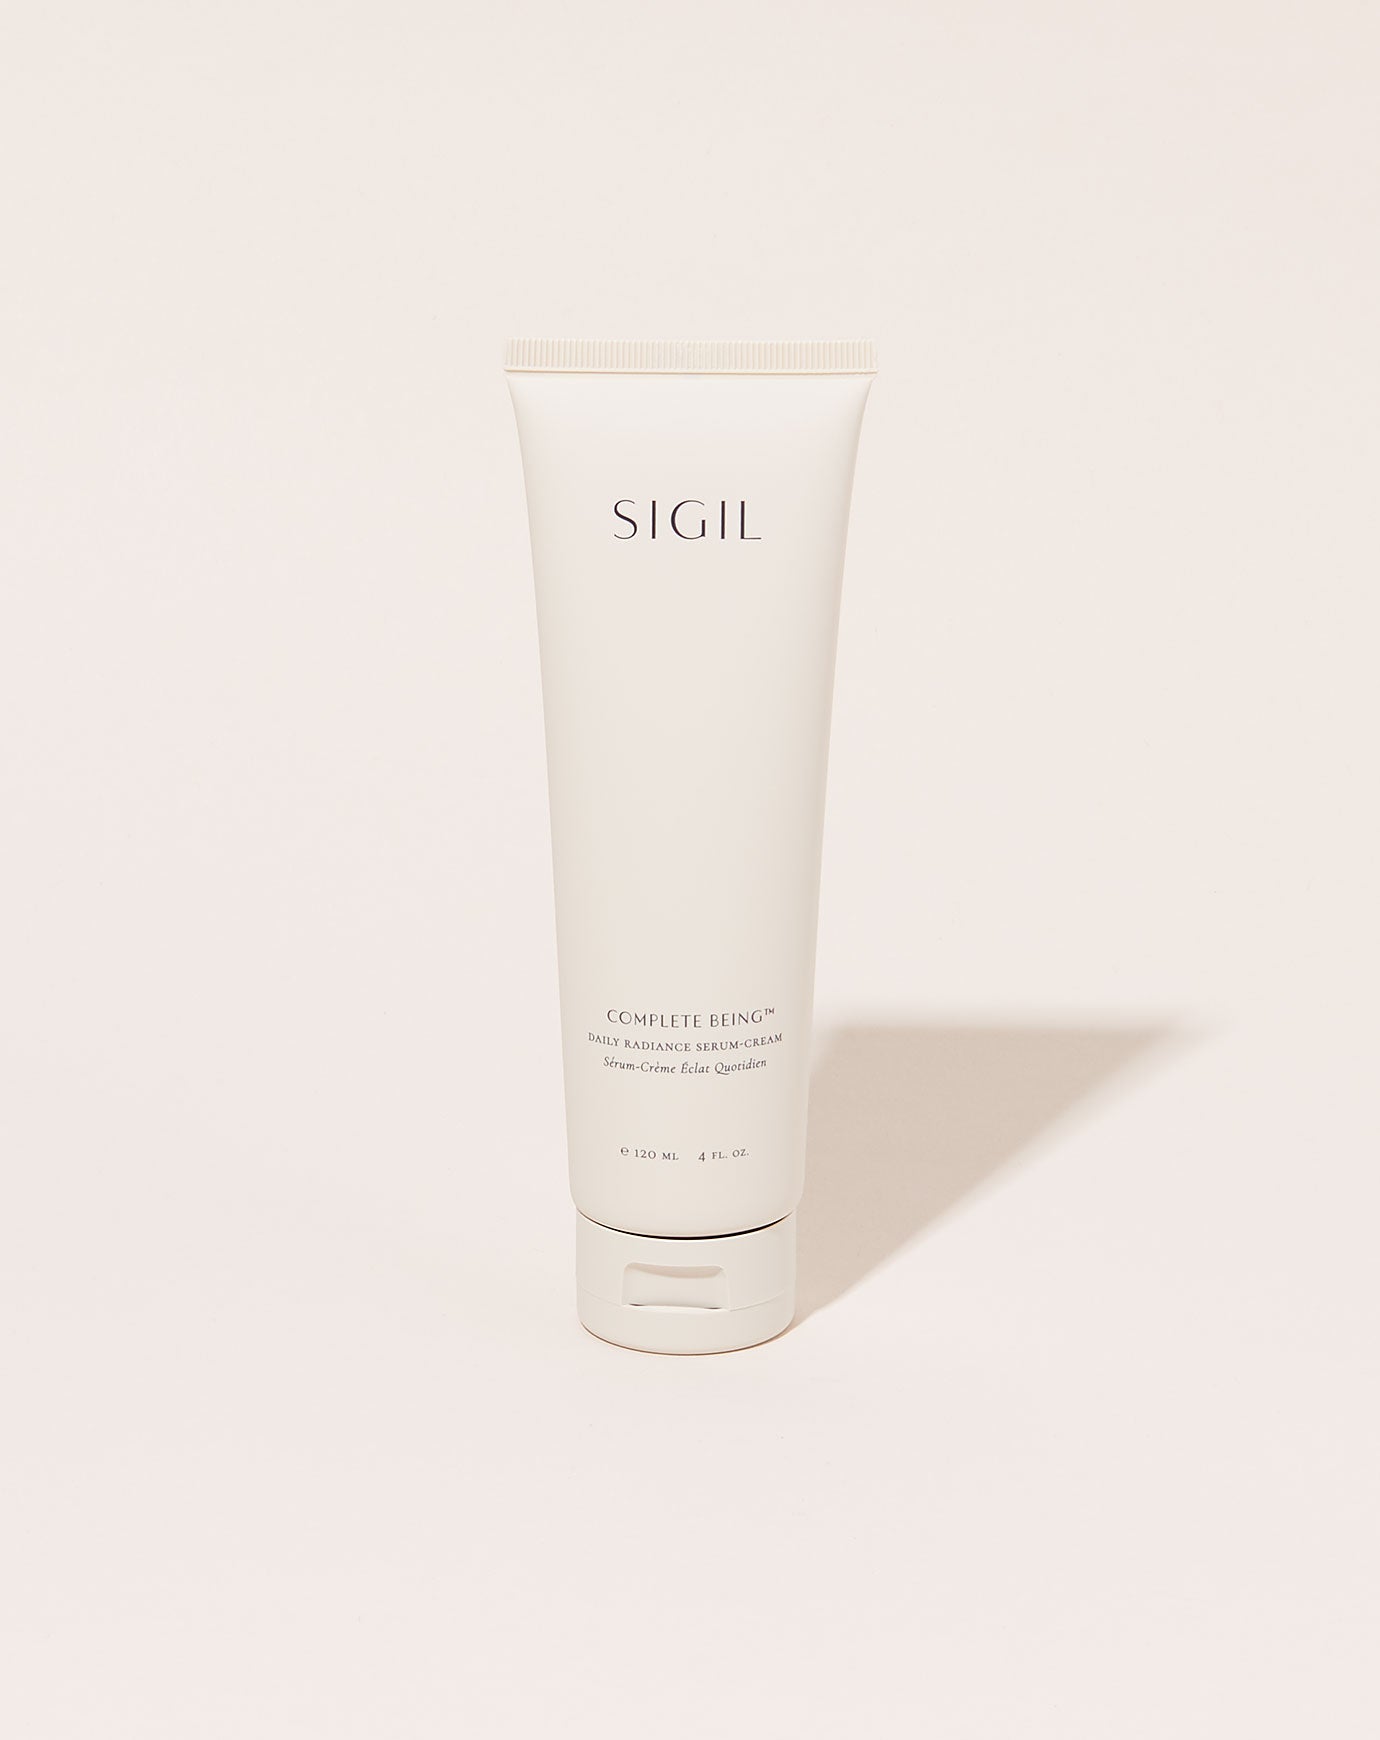 Sigil Complete Being Daily Radiance Serum-Cream